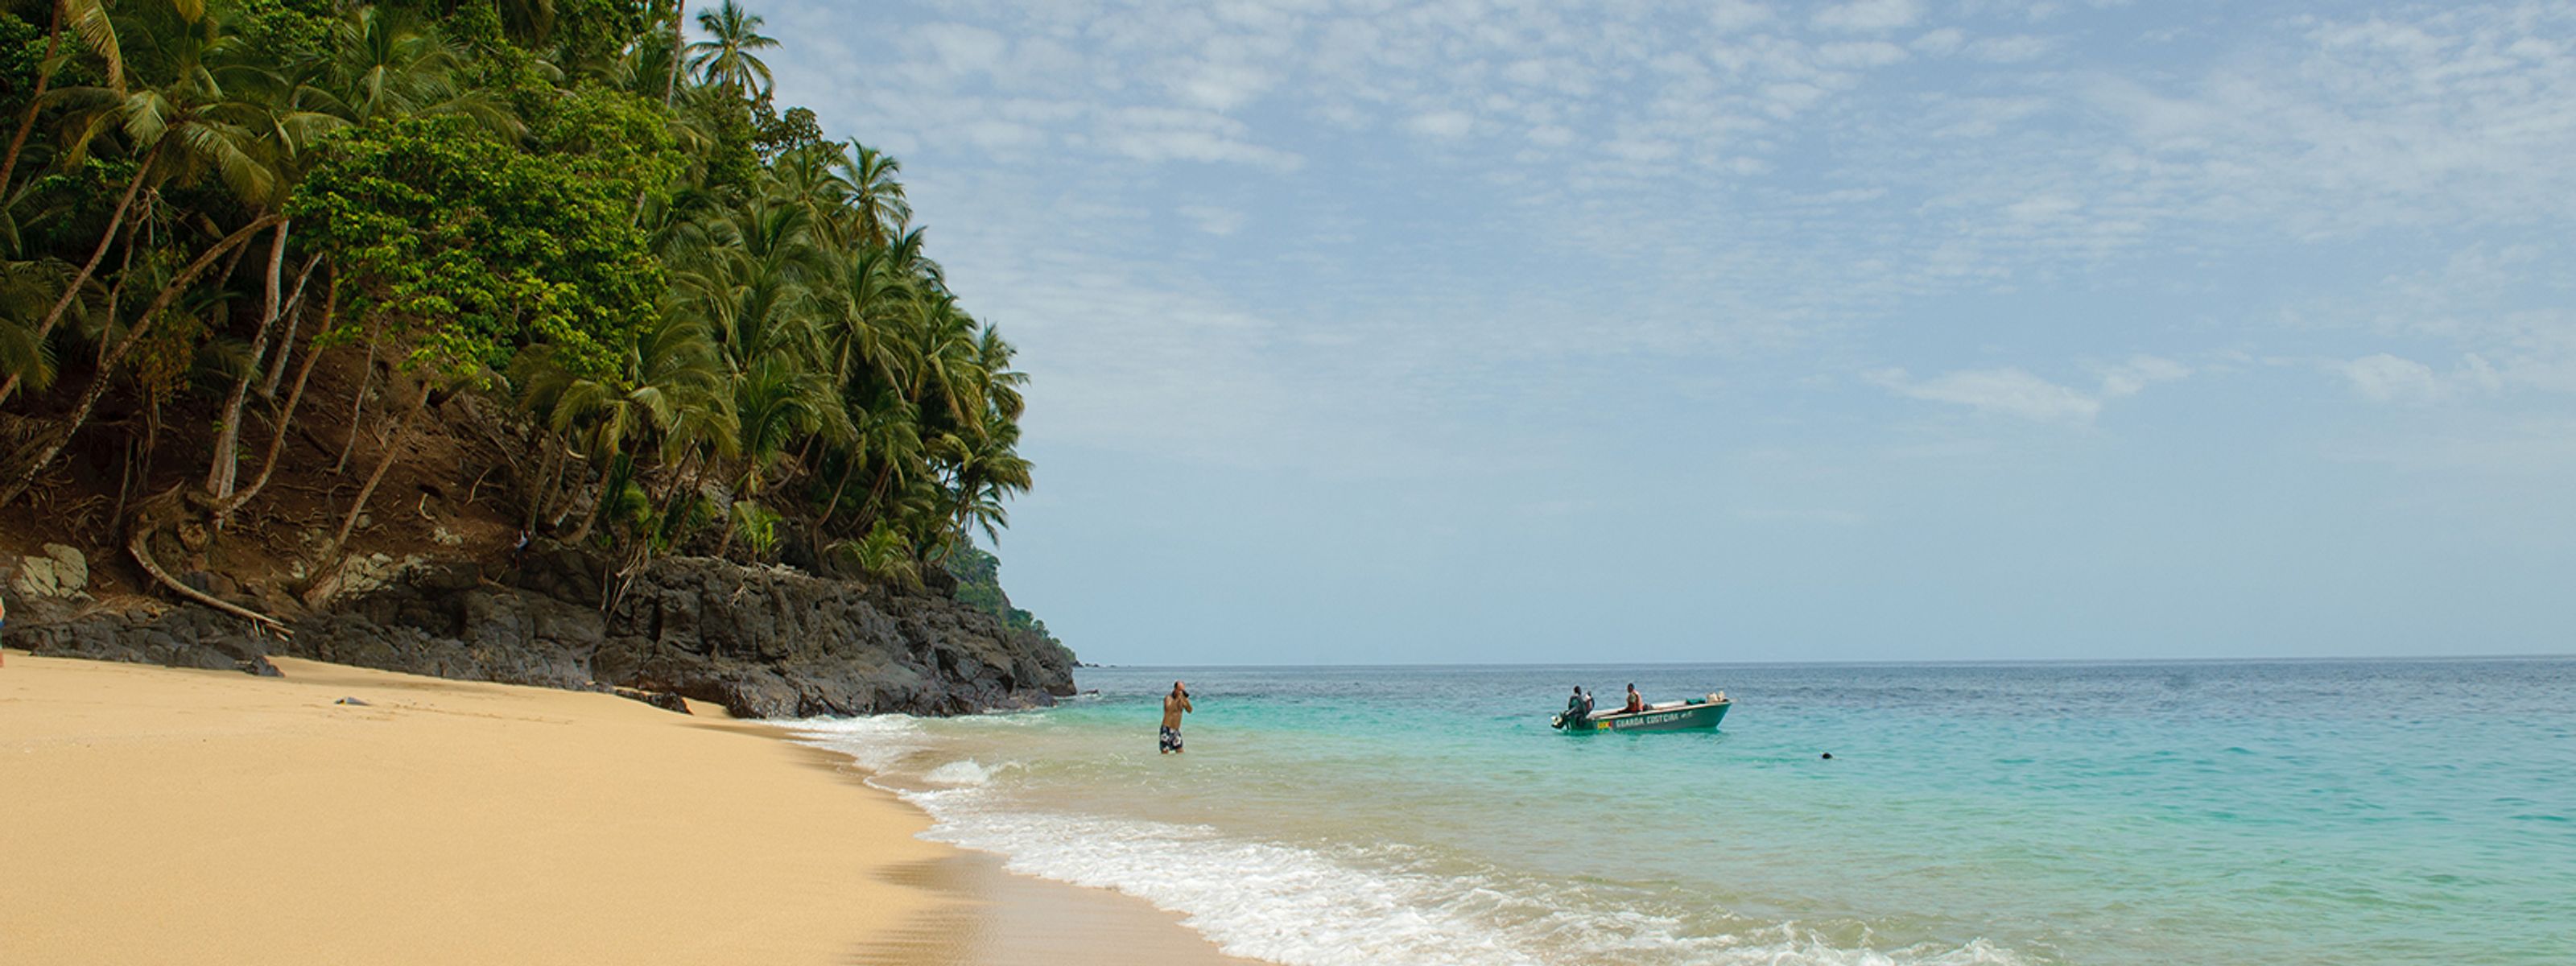 Strand auf Sao Tomé und Principe